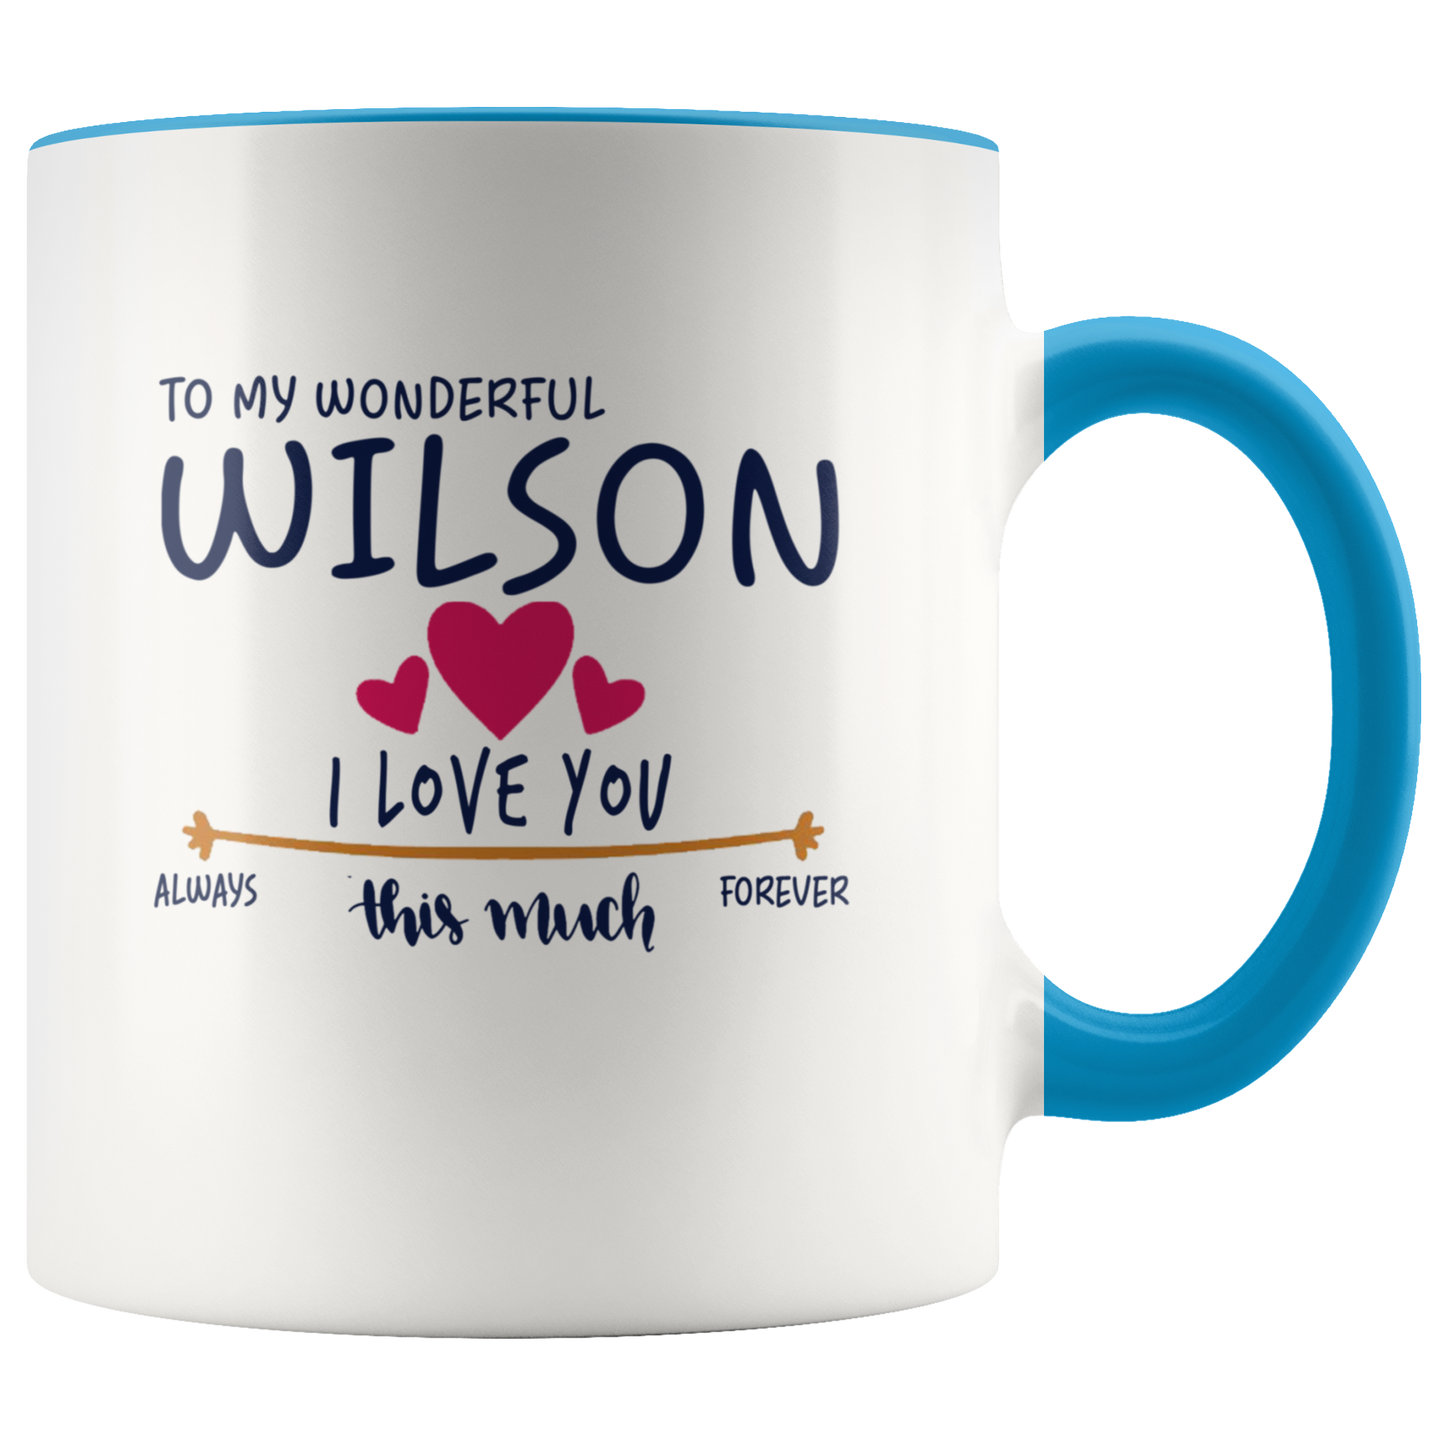 M-21260817-sp-23225 - Valentines Day Coffee Mug With Name Wilson - To My Wonderful